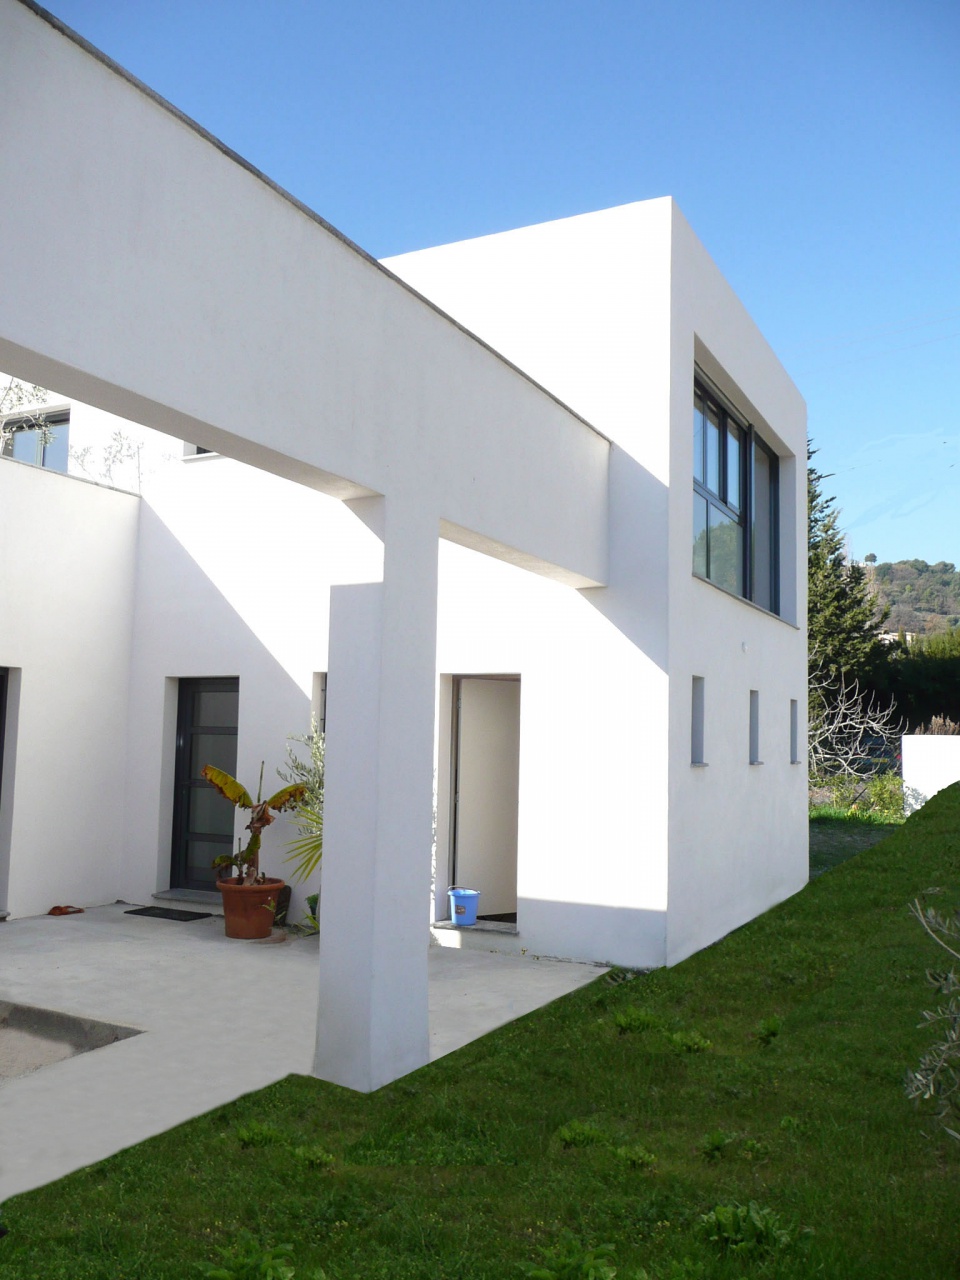 092 Maison méditerranéenne f.ferrero architecte